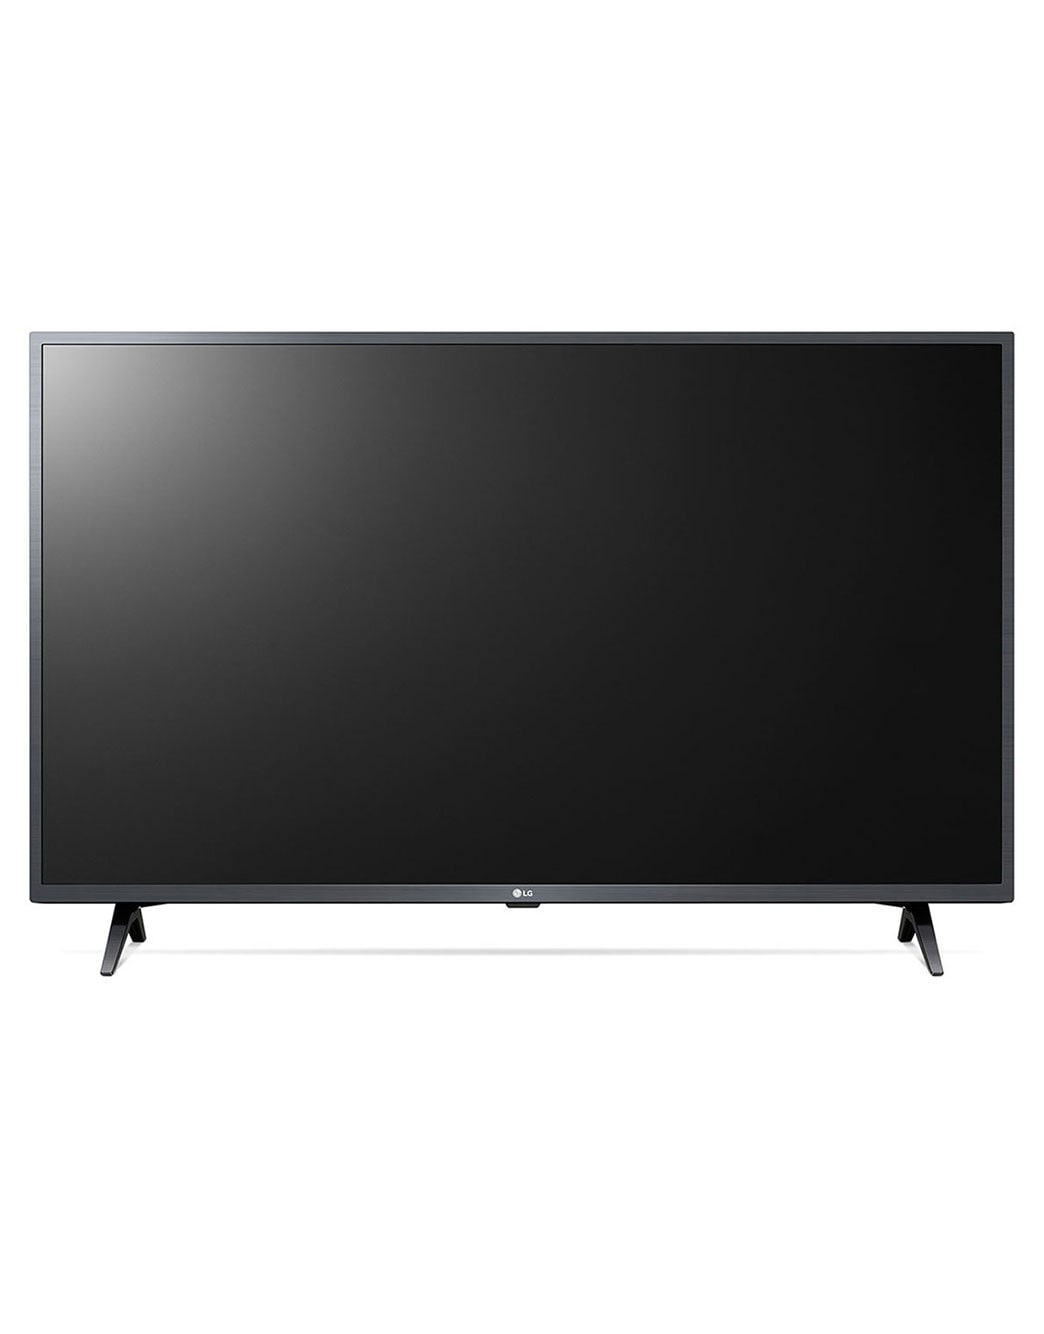 LG Smart TV, 43LM6300PVB